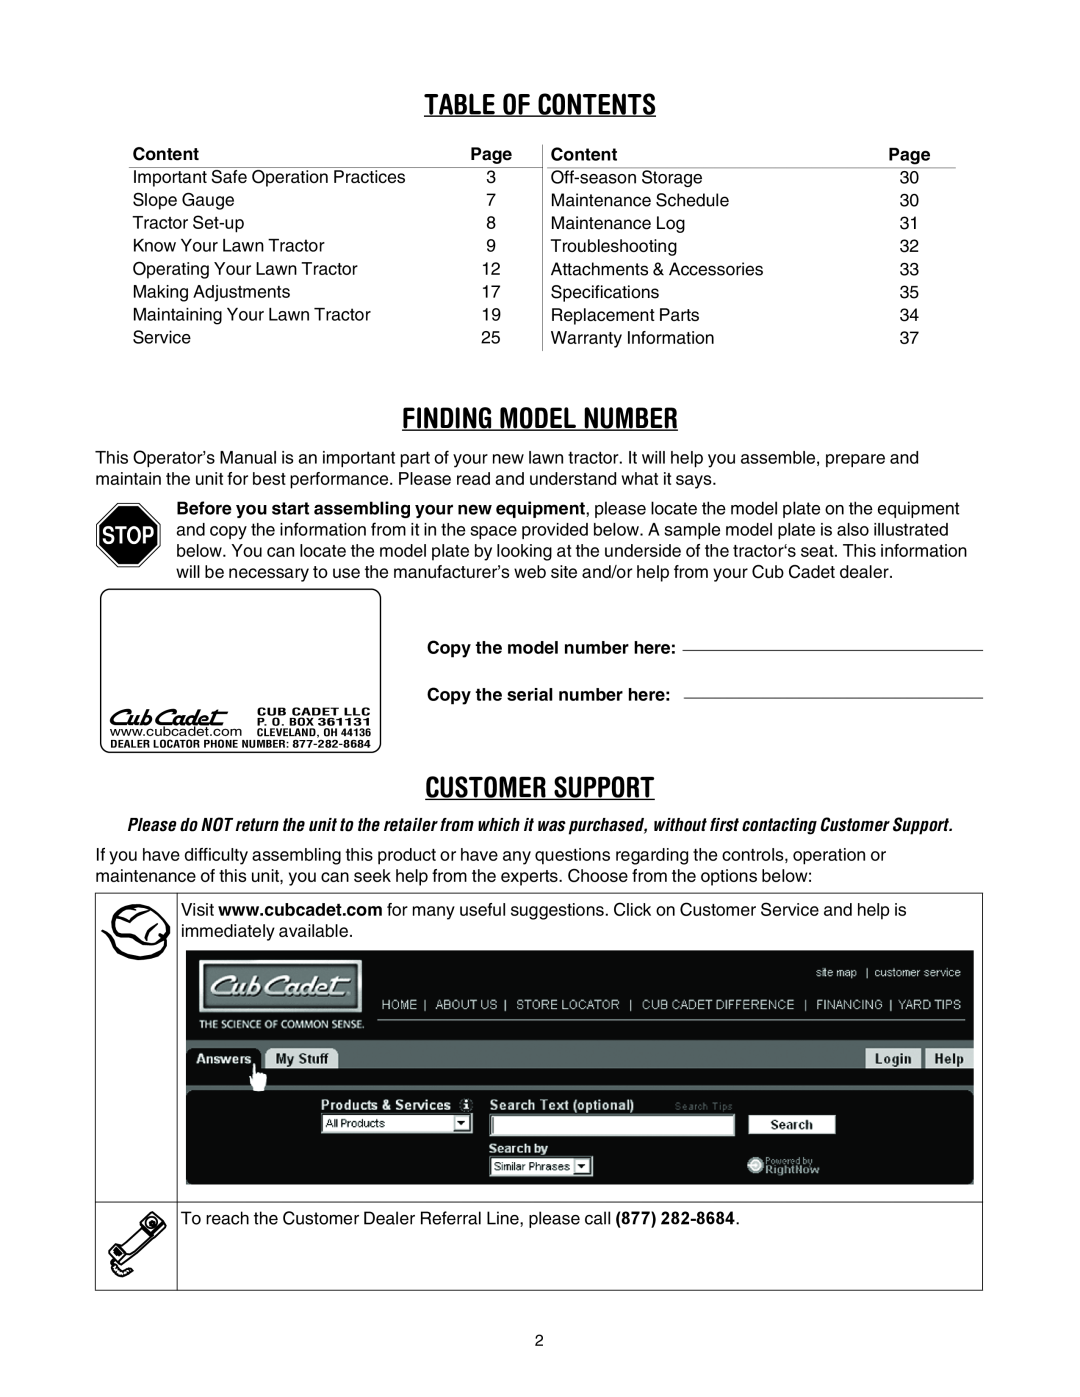 Cub Cadet LT1046, LT1042, LT1045, LT1050 manual Table Of Contents, Finding Model Number, Customer Support, Page 